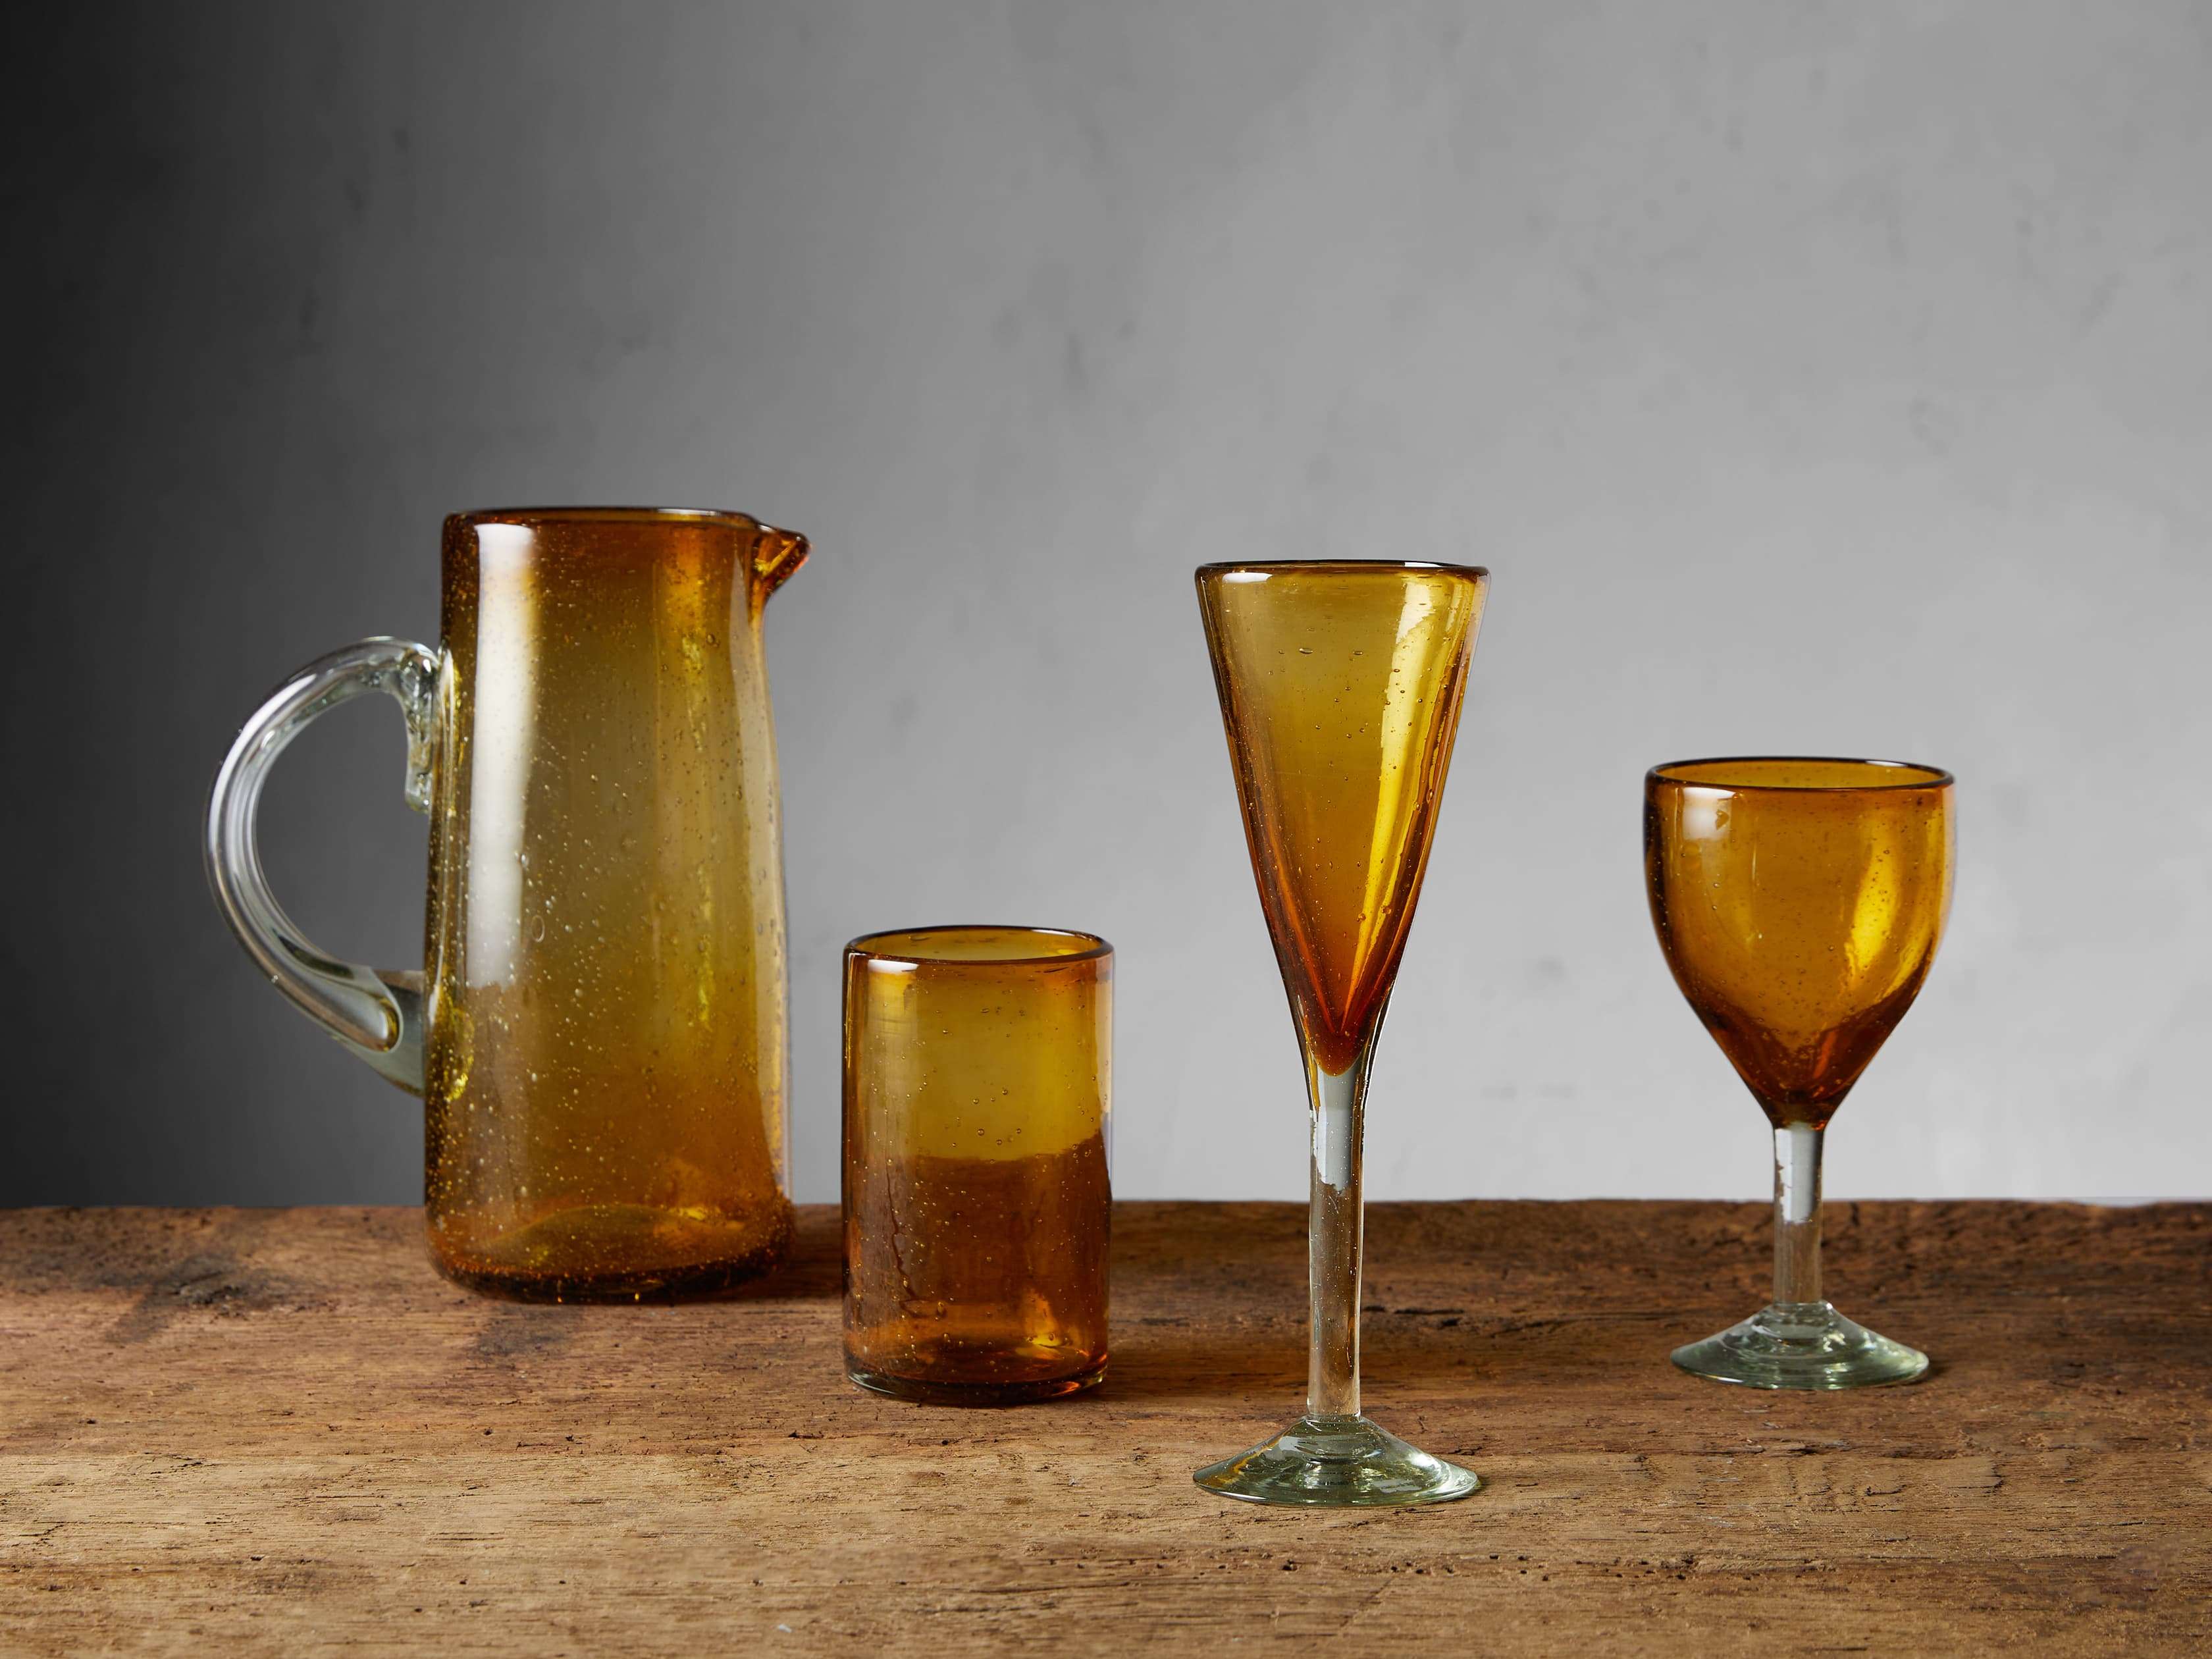 amber glass pitcher